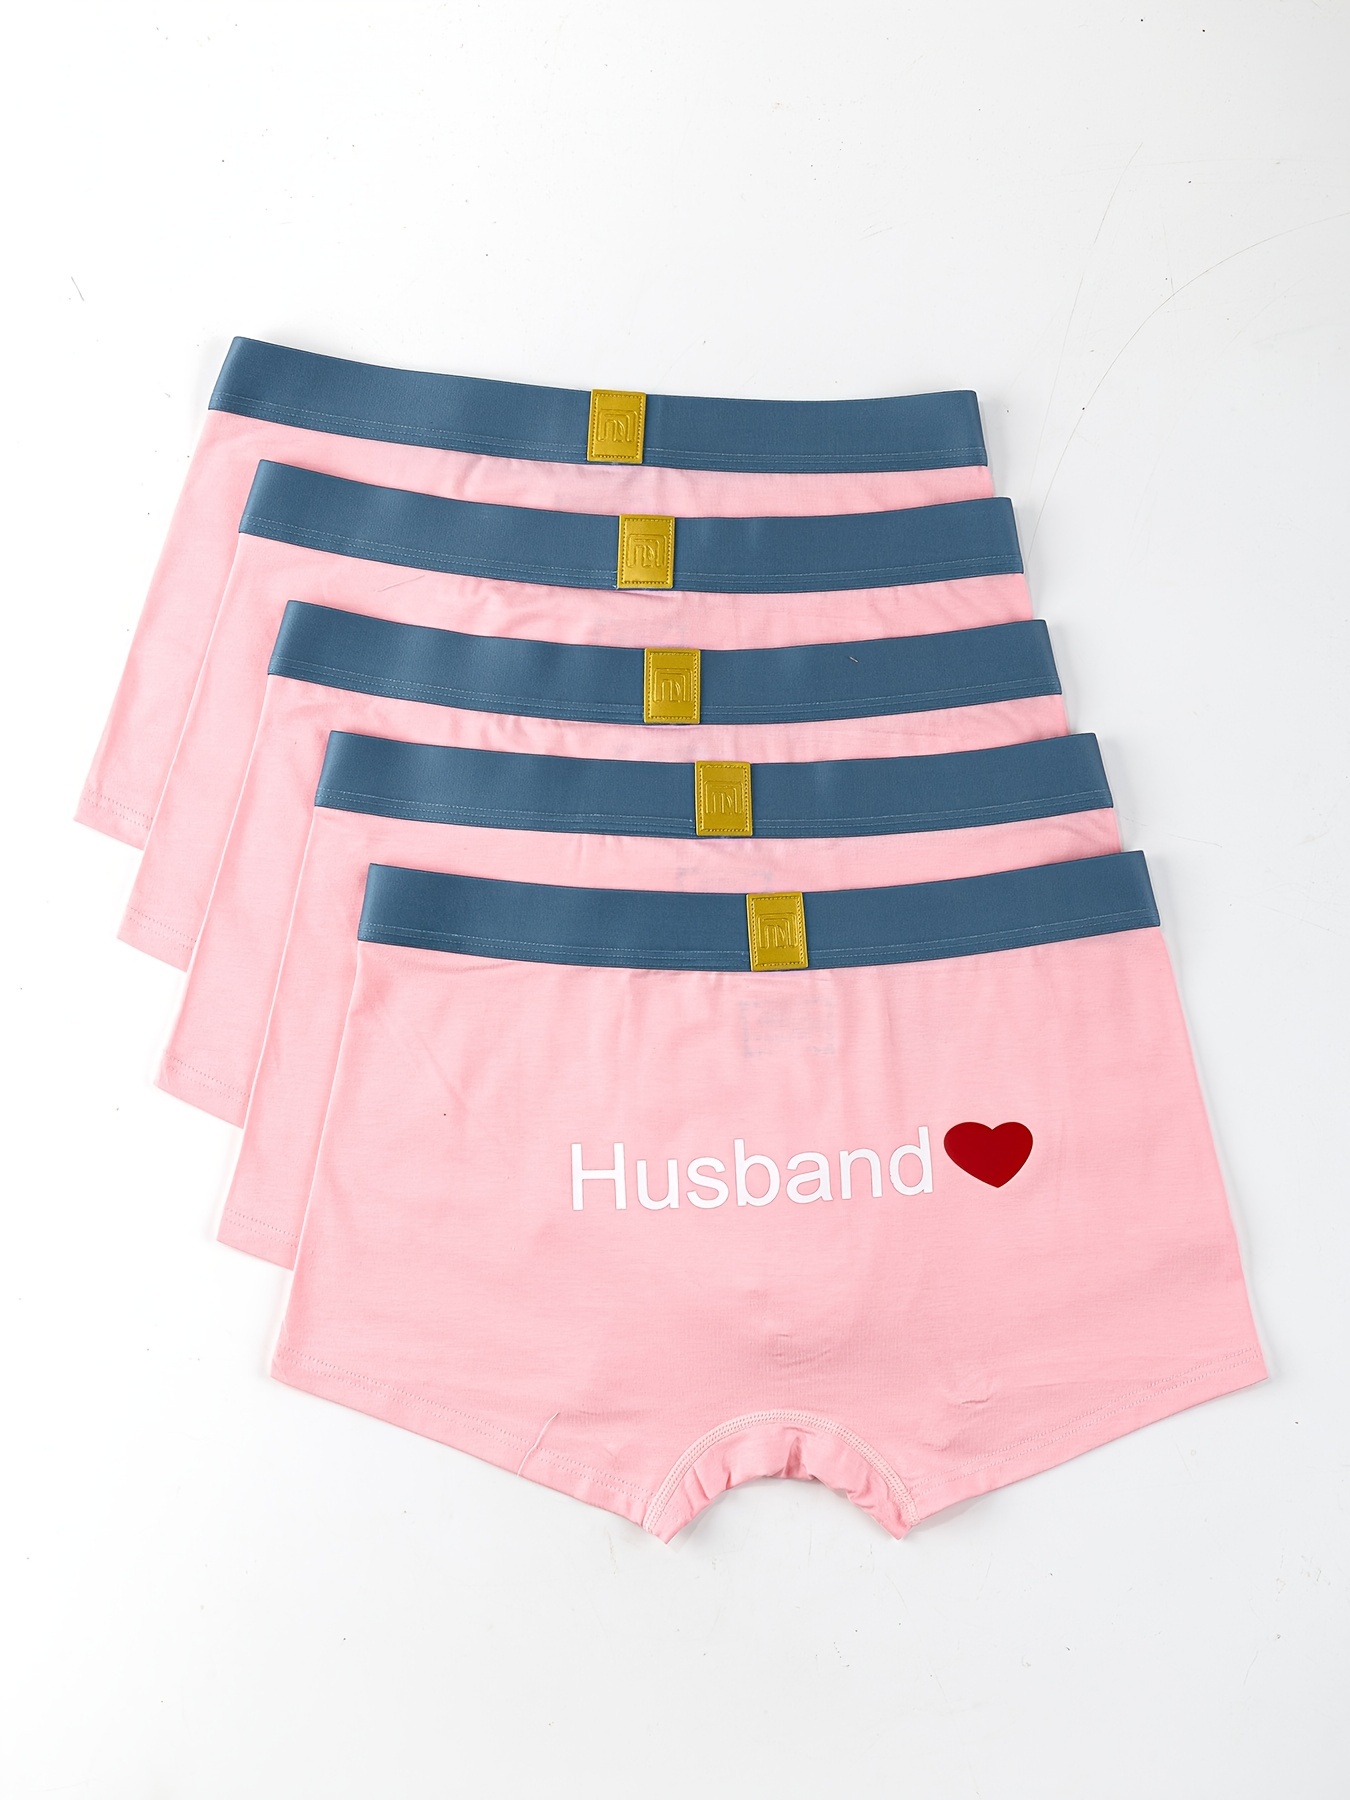 Husband Wife Couple Underwear Set